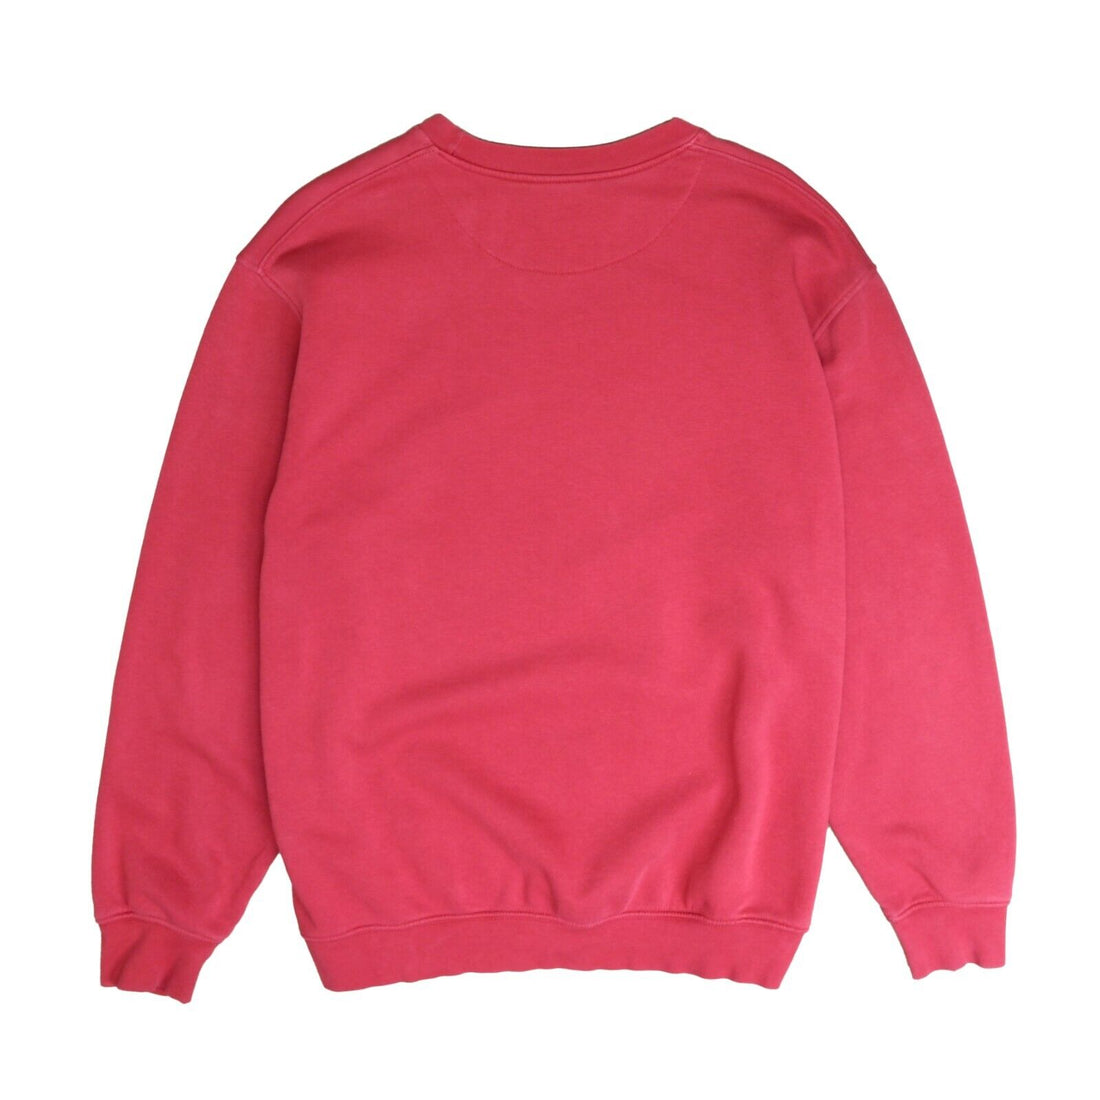 Vintage Nike Sweatshirt Crewneck Size Large Red Embroidered Swoosh